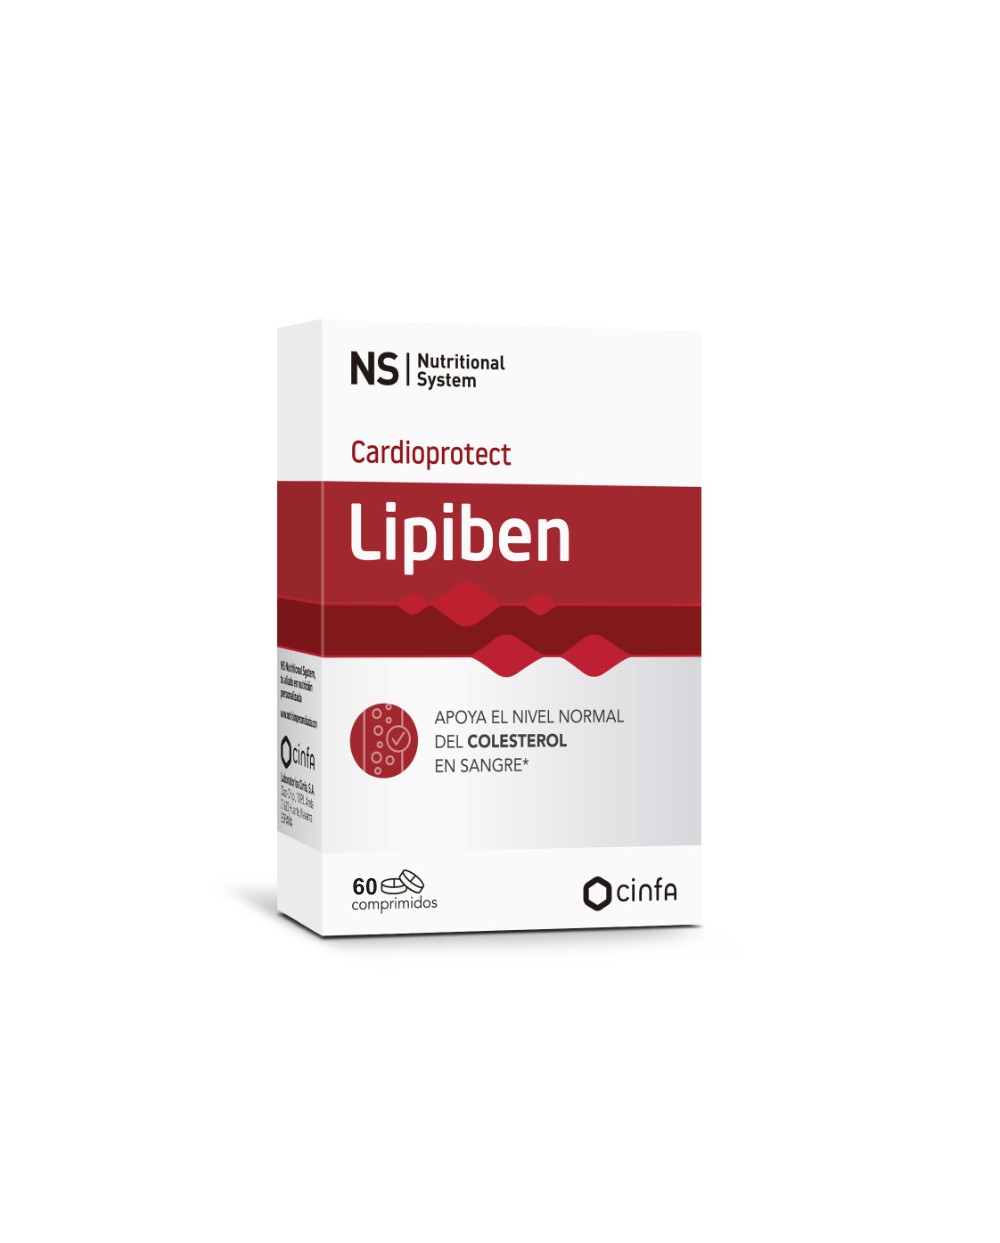 Ns Cardioprotect Lipiben 60 comprimidos - ayuda a mantener unos niveles normales de coresterol